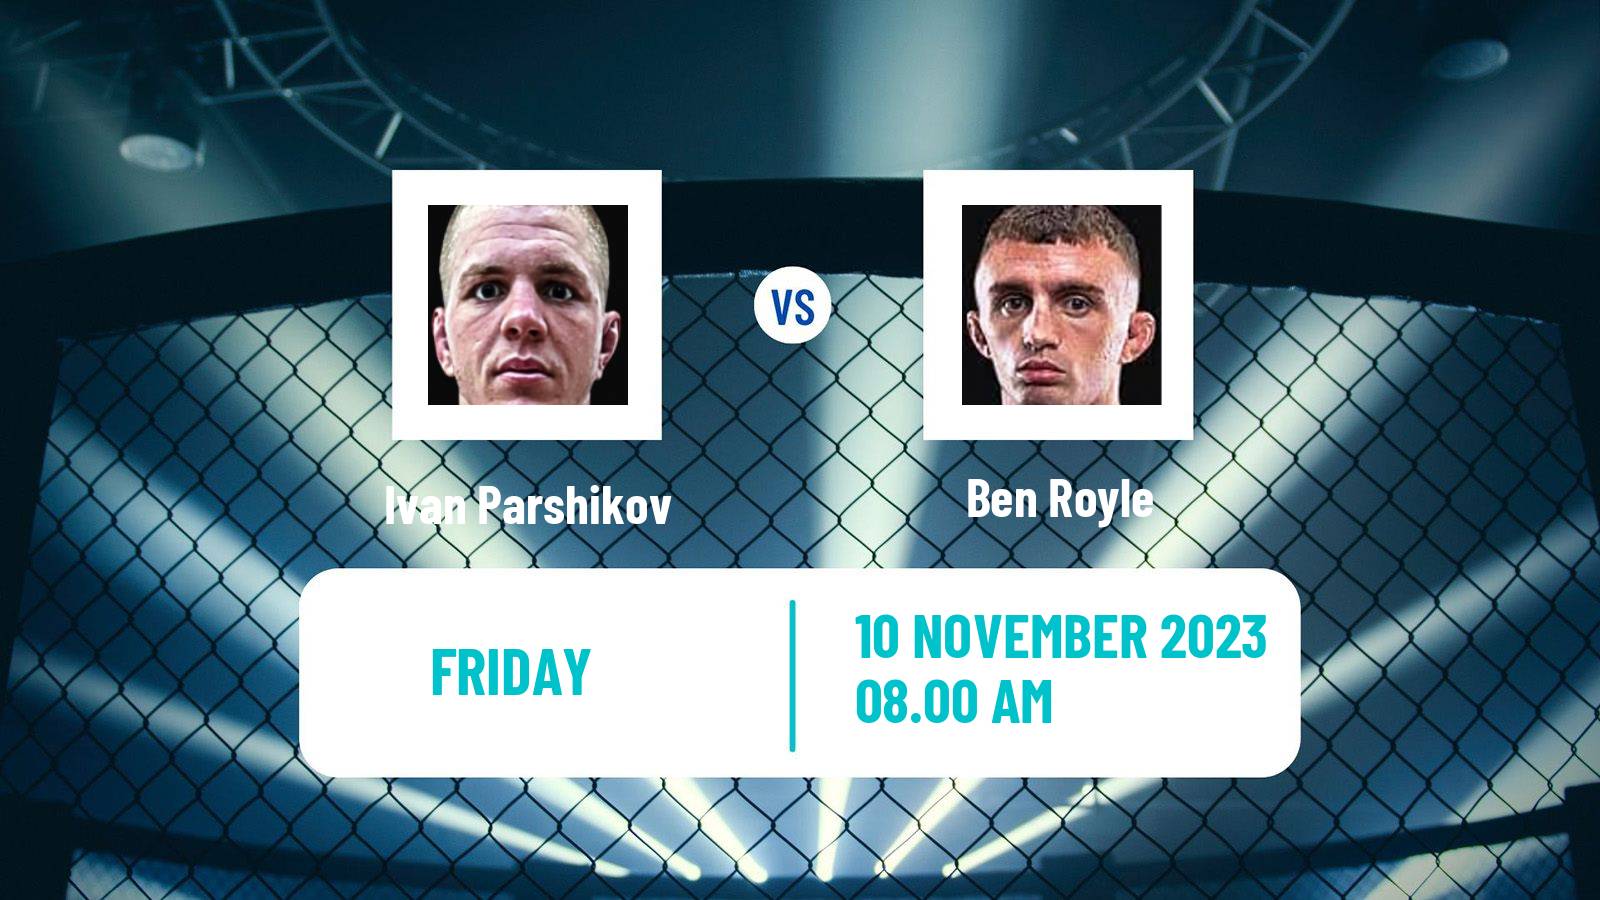 MMA Bantamweight One Championship Men Ivan Parshikov - Ben Royle